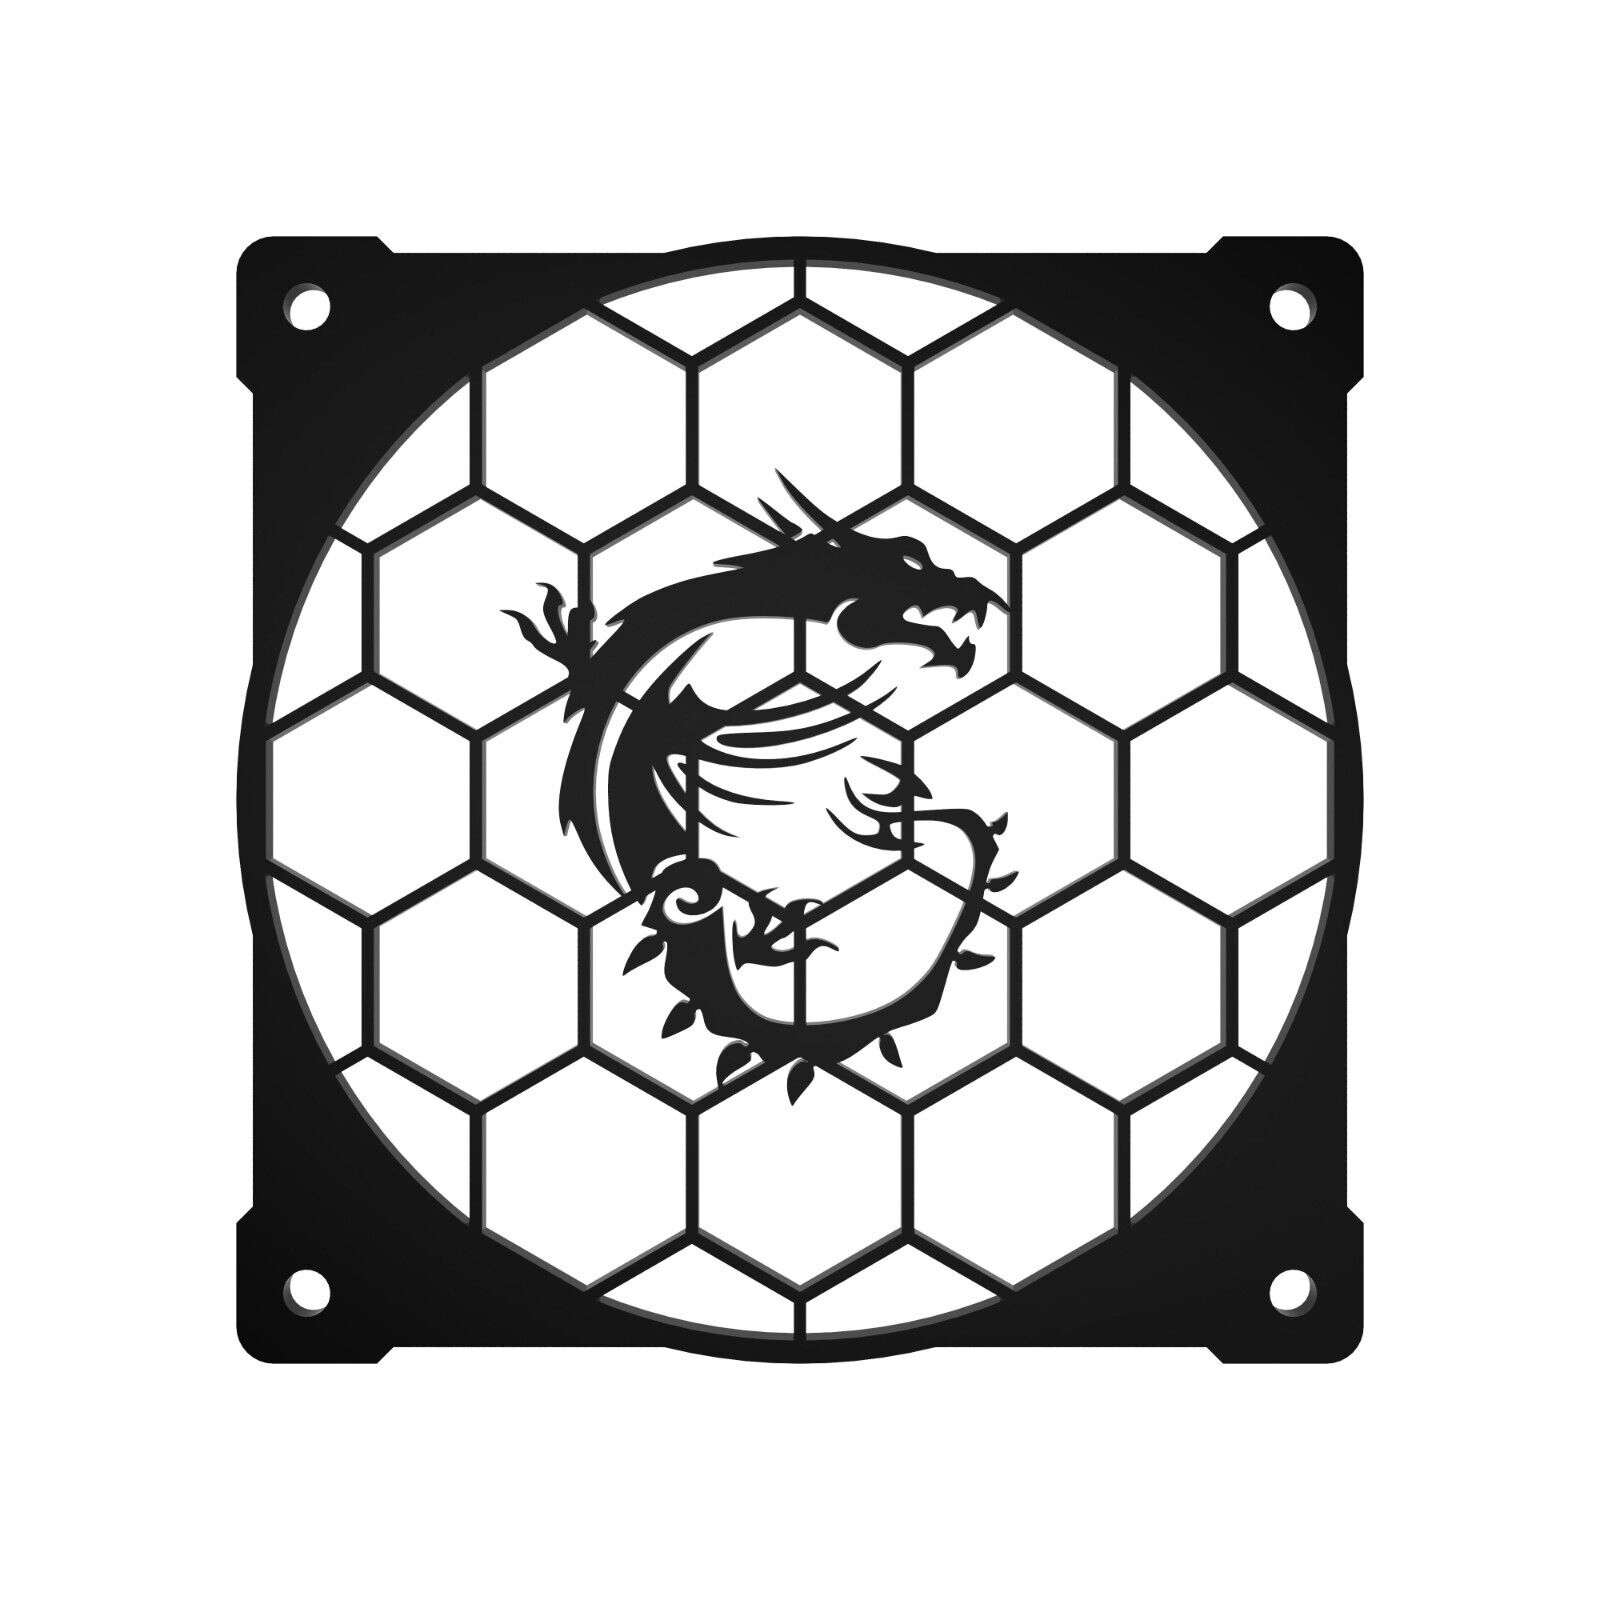 120mm Case Fan Cover - Unique MSI Dragon Hexagon Design Great for RGB aRGB Fans